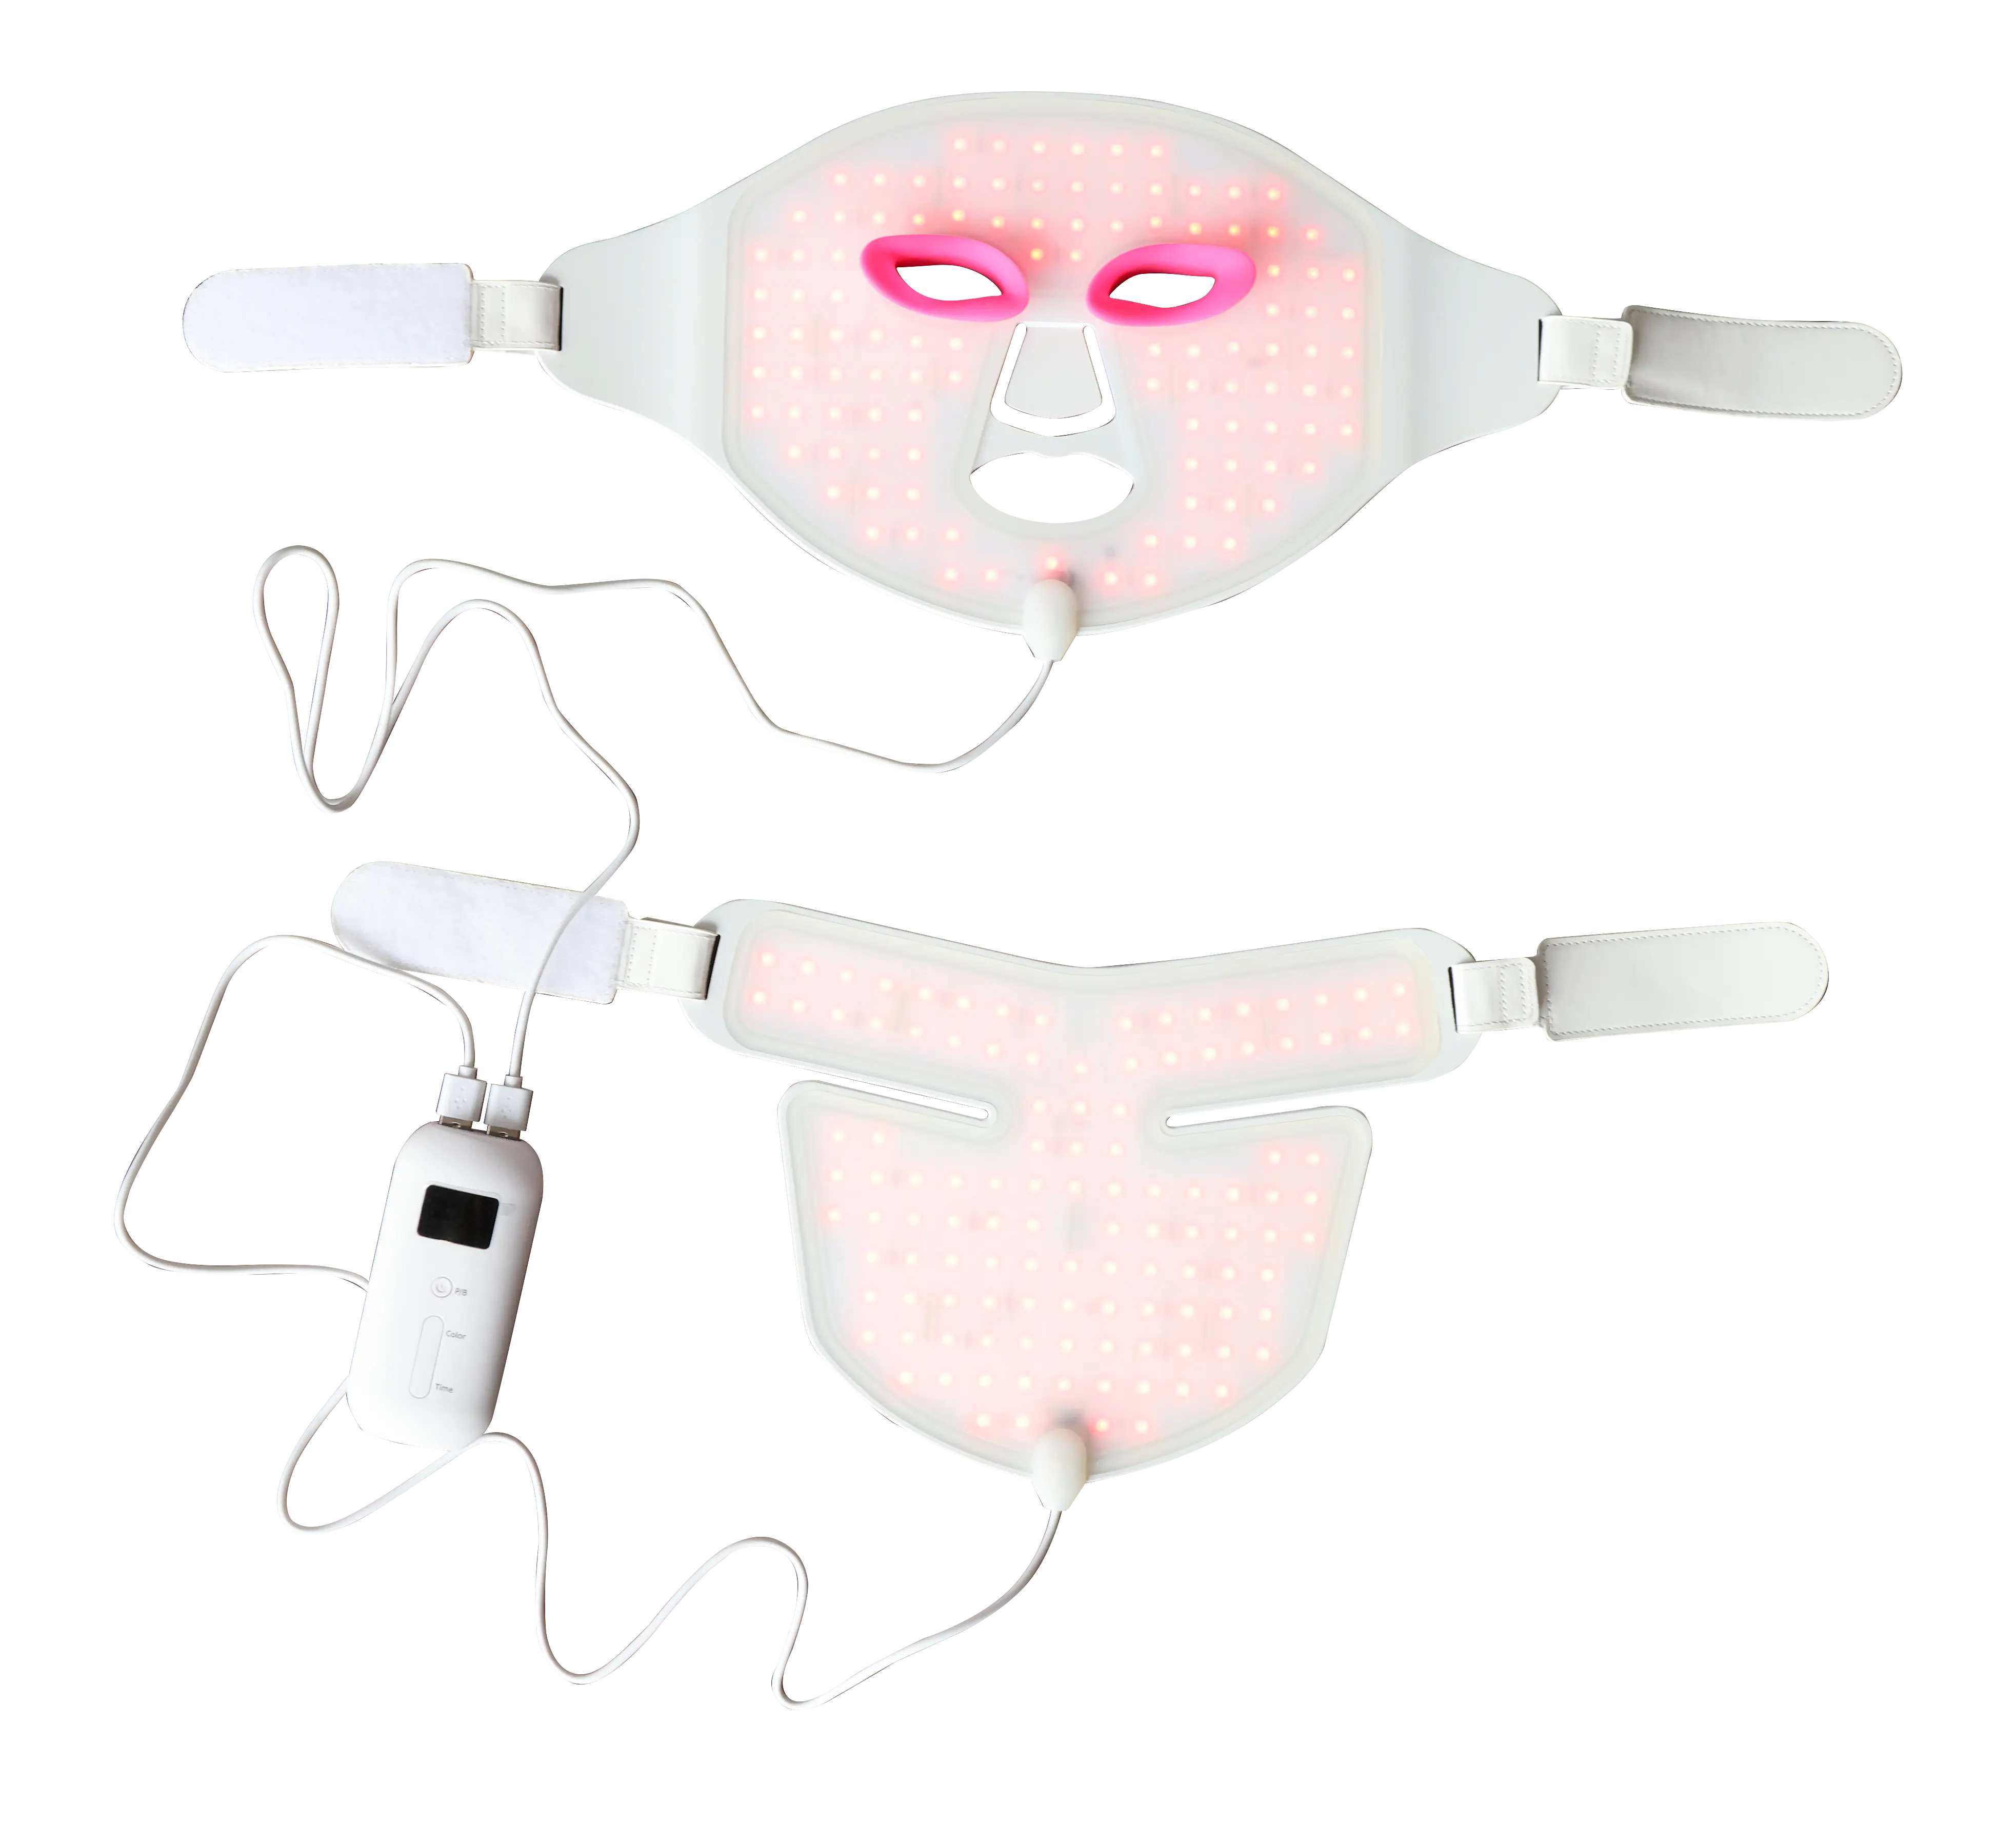 Shenzhen Ideatherapy masker wajah Led warna-warni, perangkat kecantikan baru 7 warna cahaya untuk perawatan kulit wajah